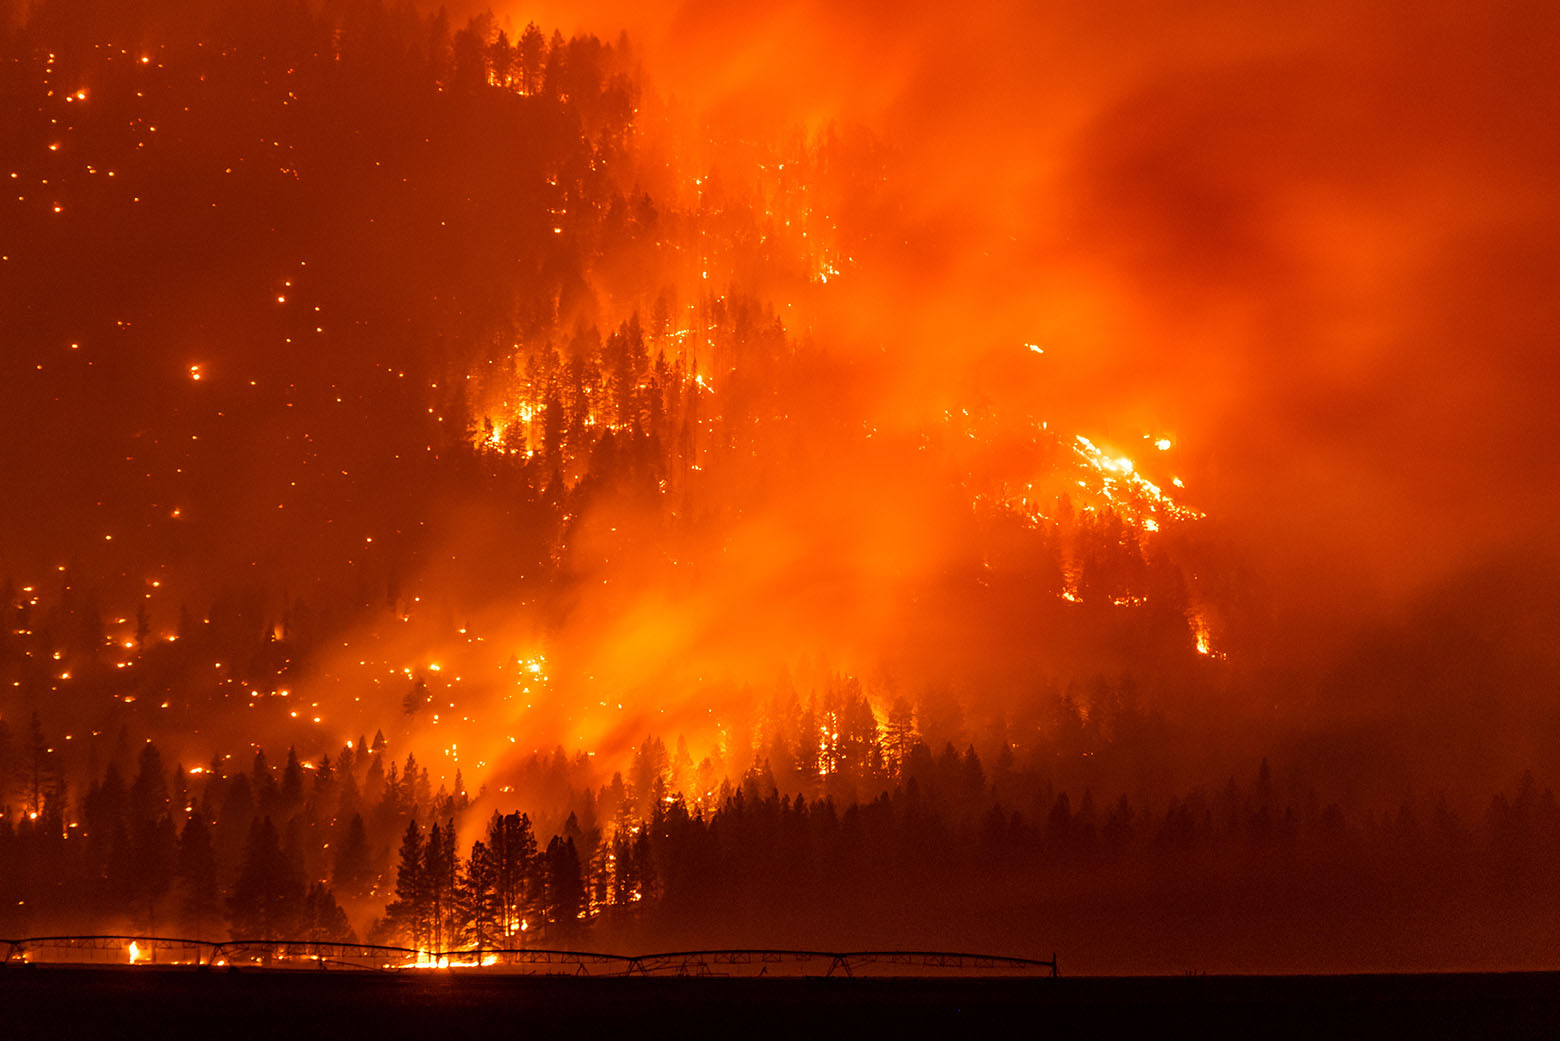 Study: Severe Wildfire More Common Prior to 1900